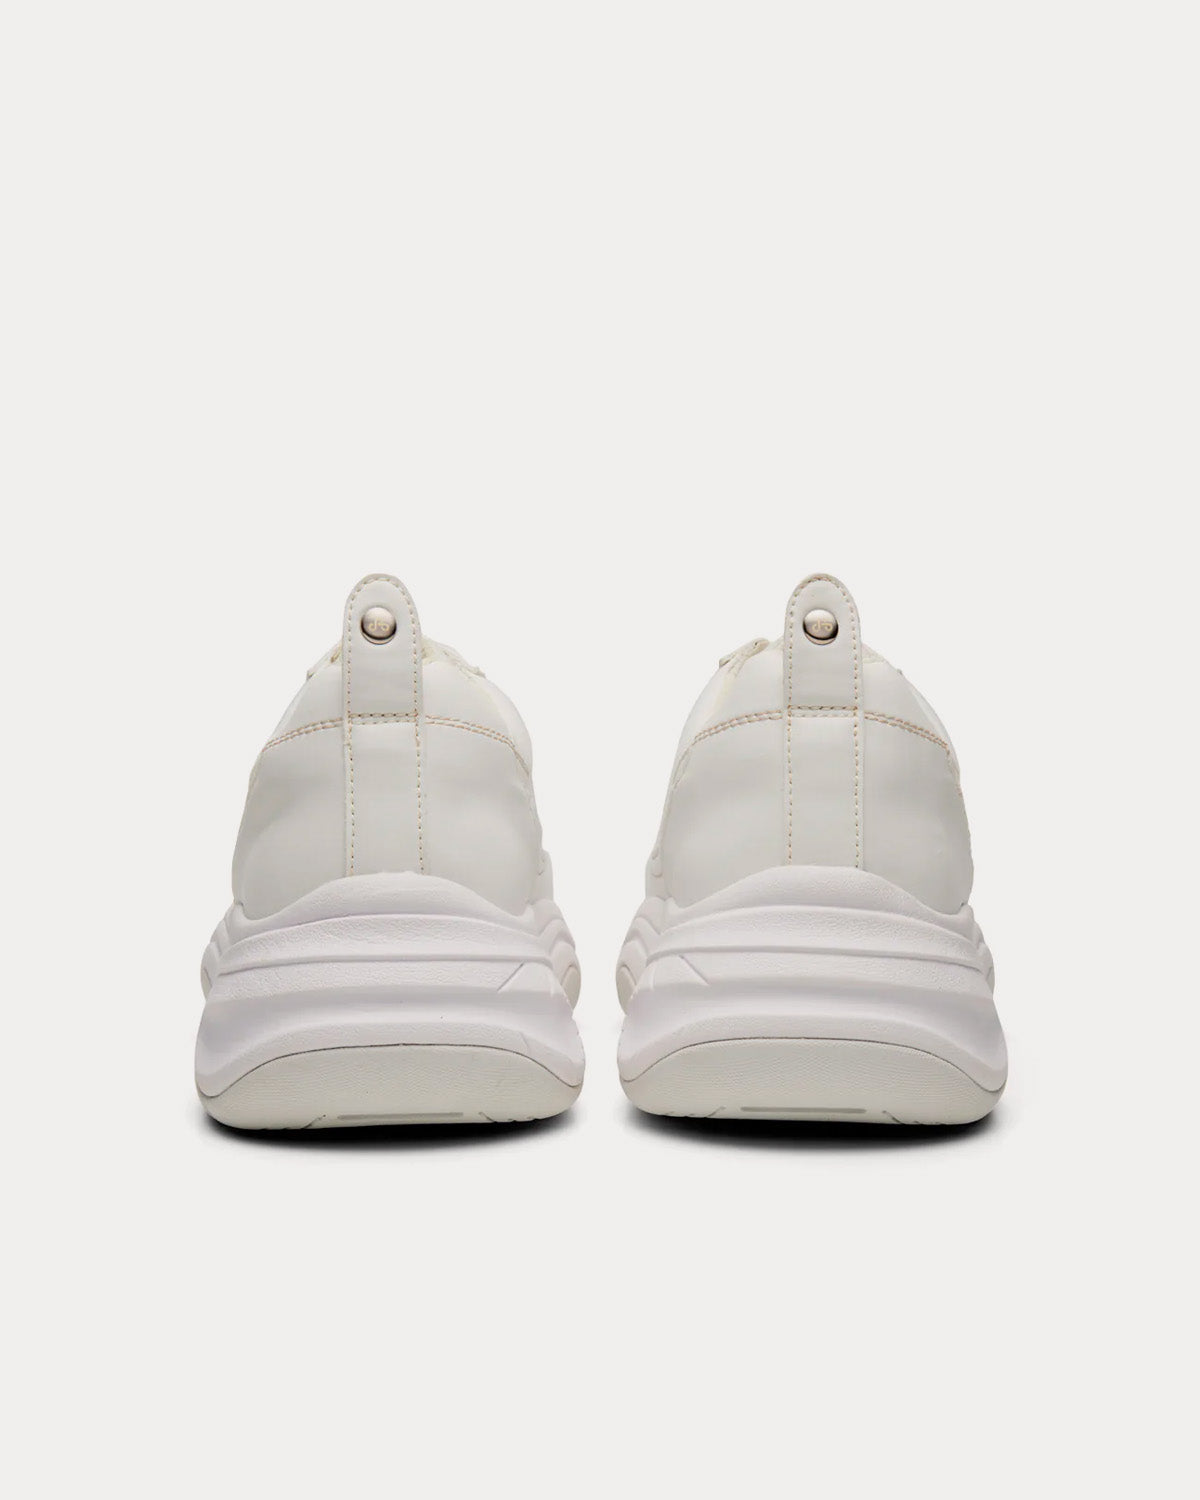 OAO - Sunlight White Low Top Sneakers